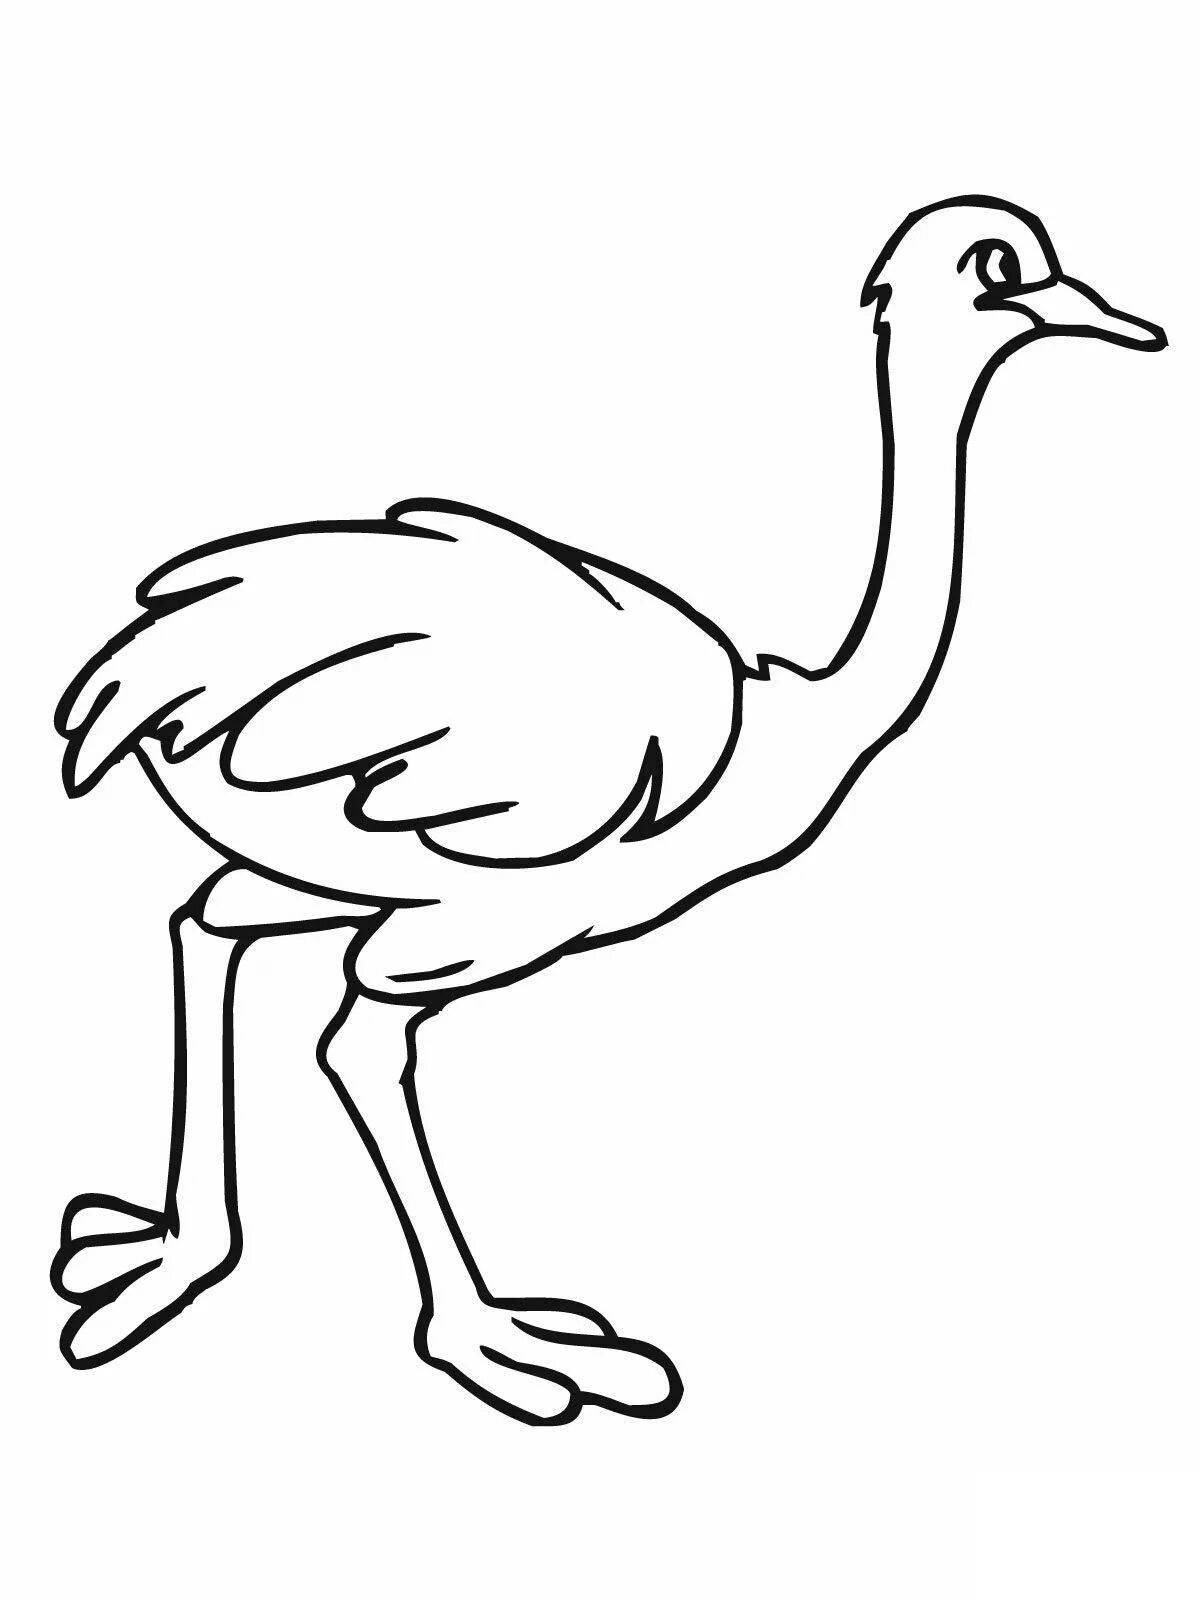 Joyful ostrich coloring for kids